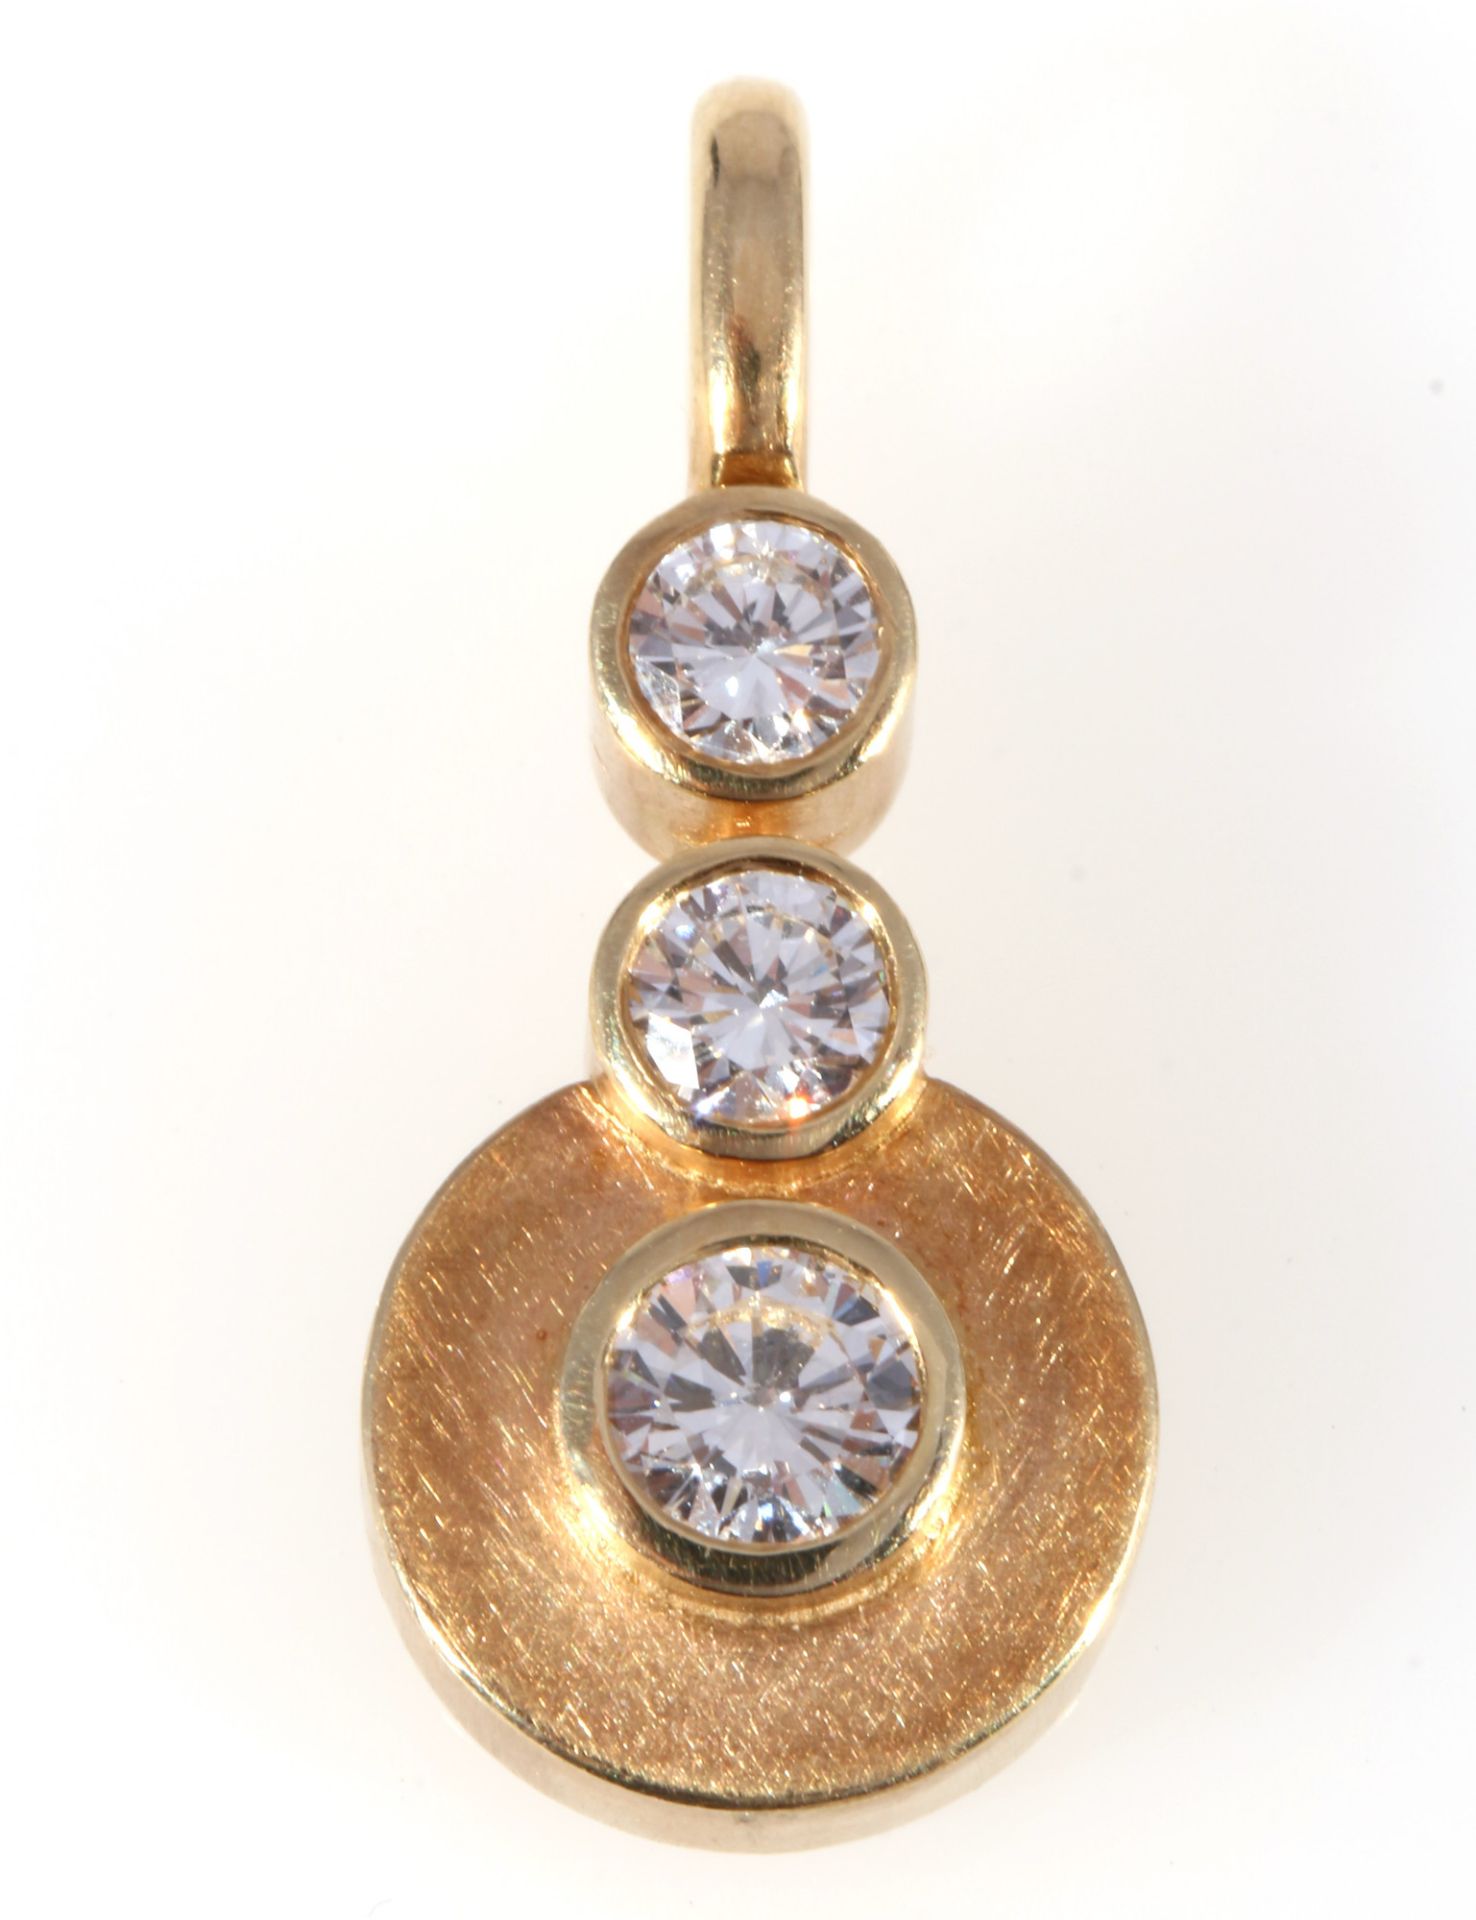 585 Gold Anhänger mit 3 großen Brillanten ca. 0,85ct, 14K gold pendant with 3 large diamonds ca. 0.8